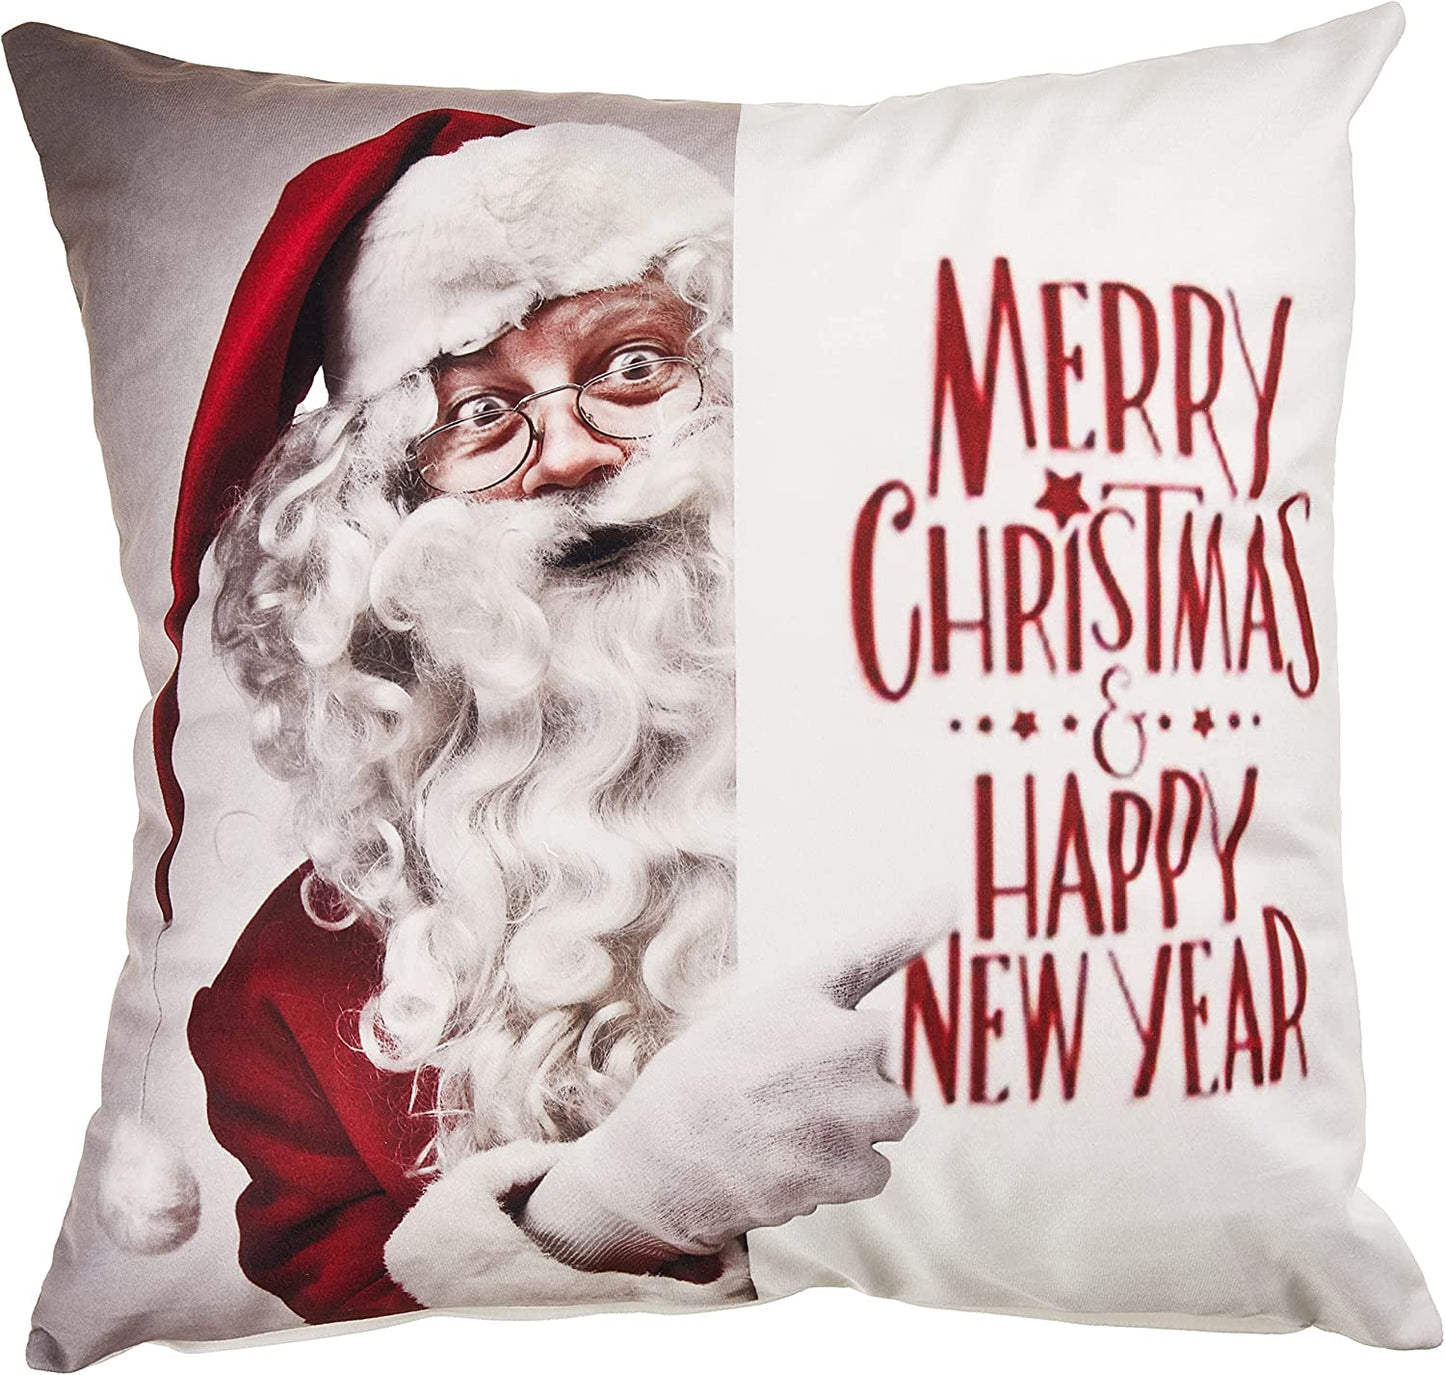 Seasonal Christmas Santa Claus Actions Pattern Decorative Accent Throw Pillow